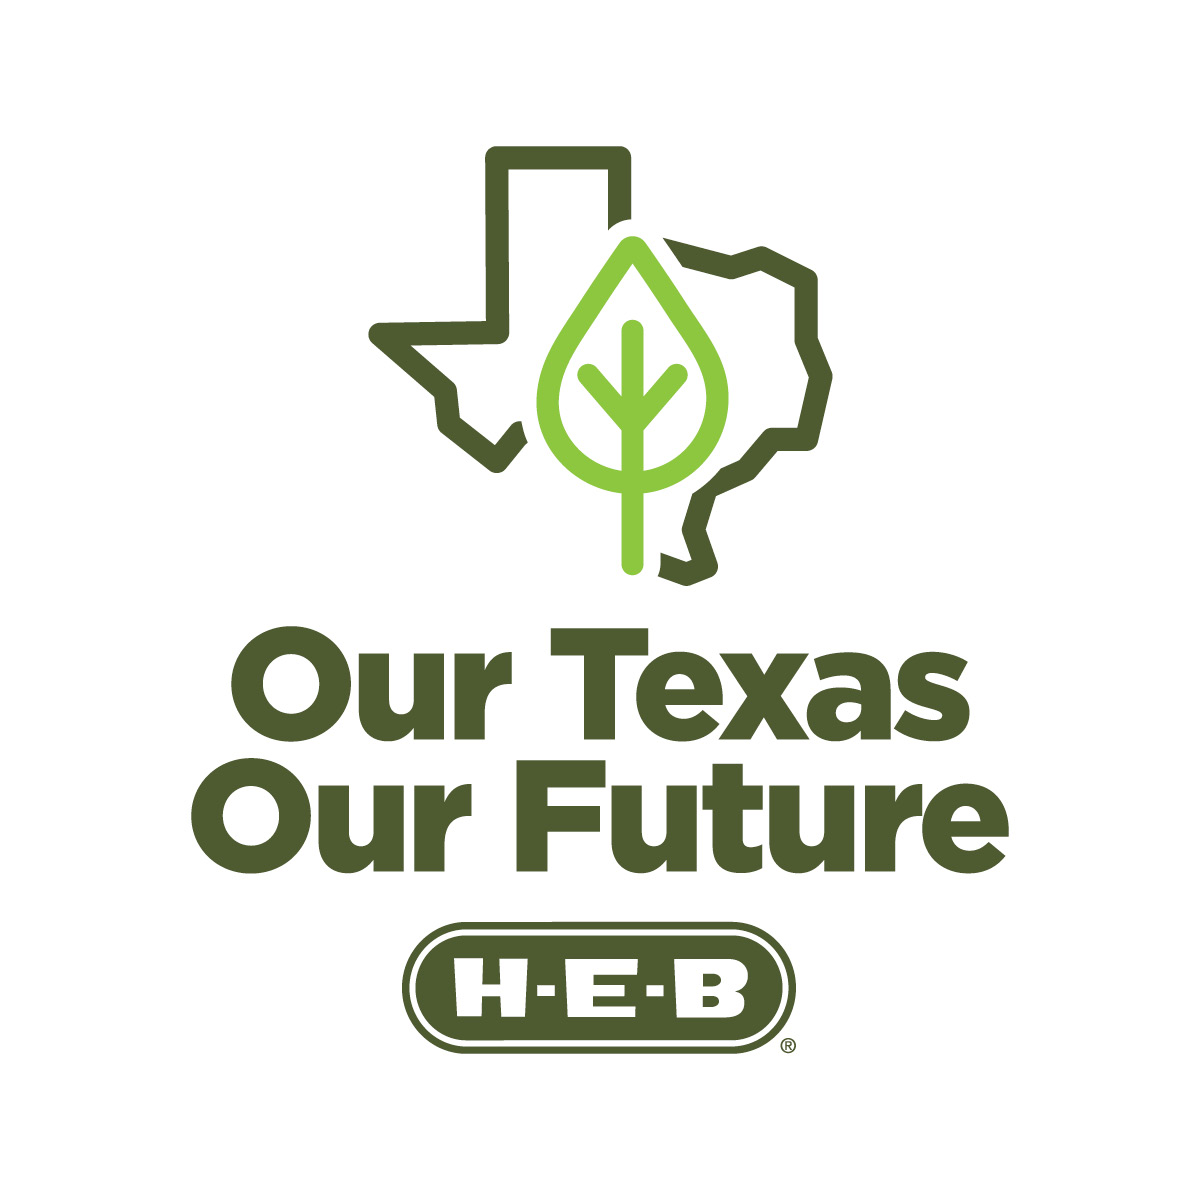 Our Texas Our Future, H-E-B